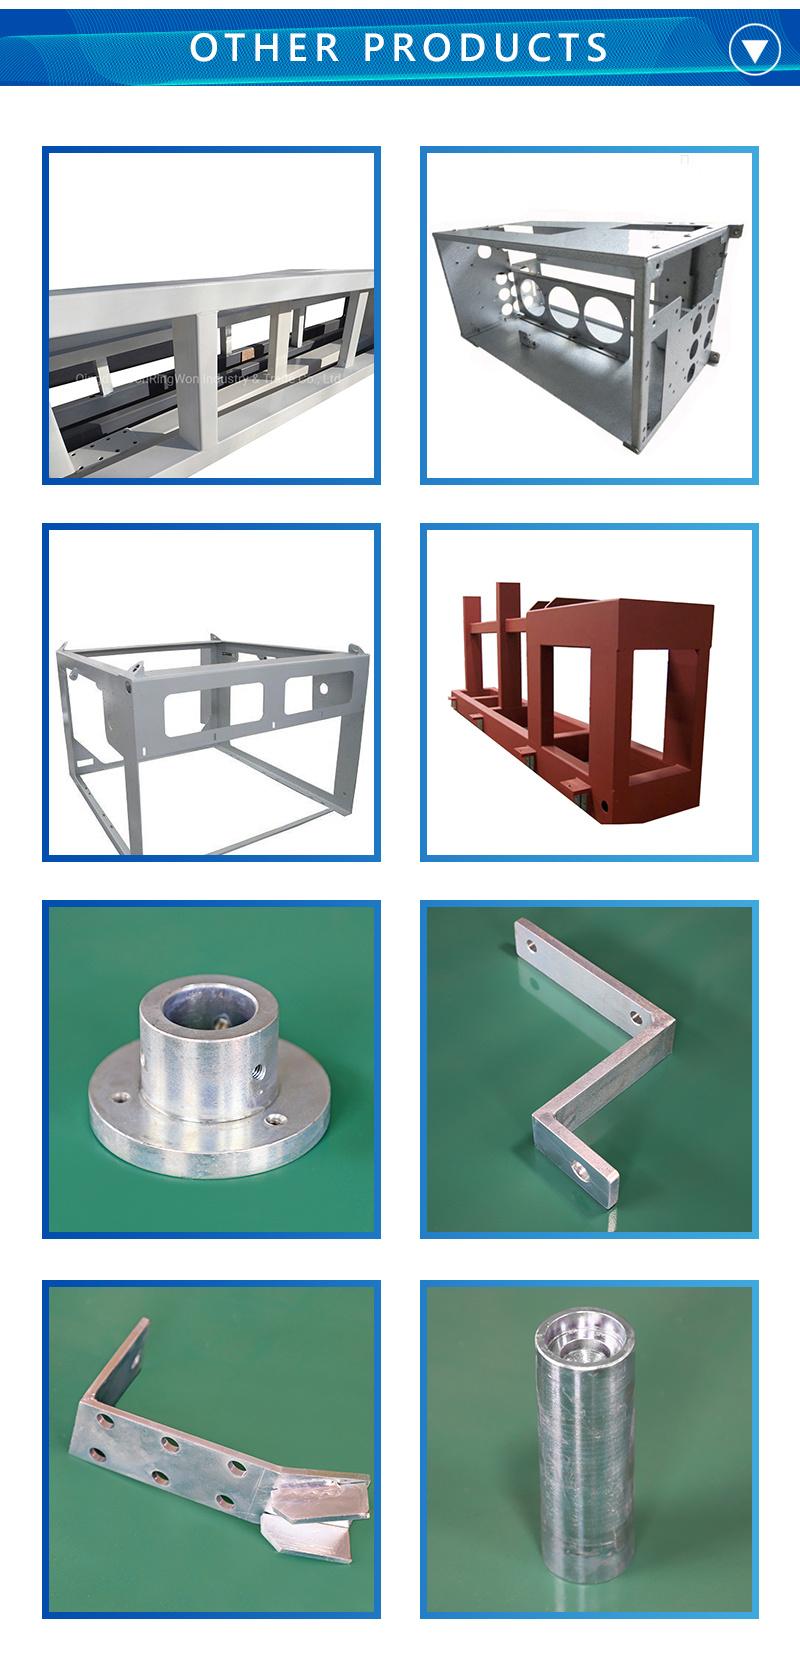 Customizable Conveyor Roller, Impact/Trough Roller for Power Station/Belt Conveyor Idlers, Gravity Female Thread Conveyor Roller